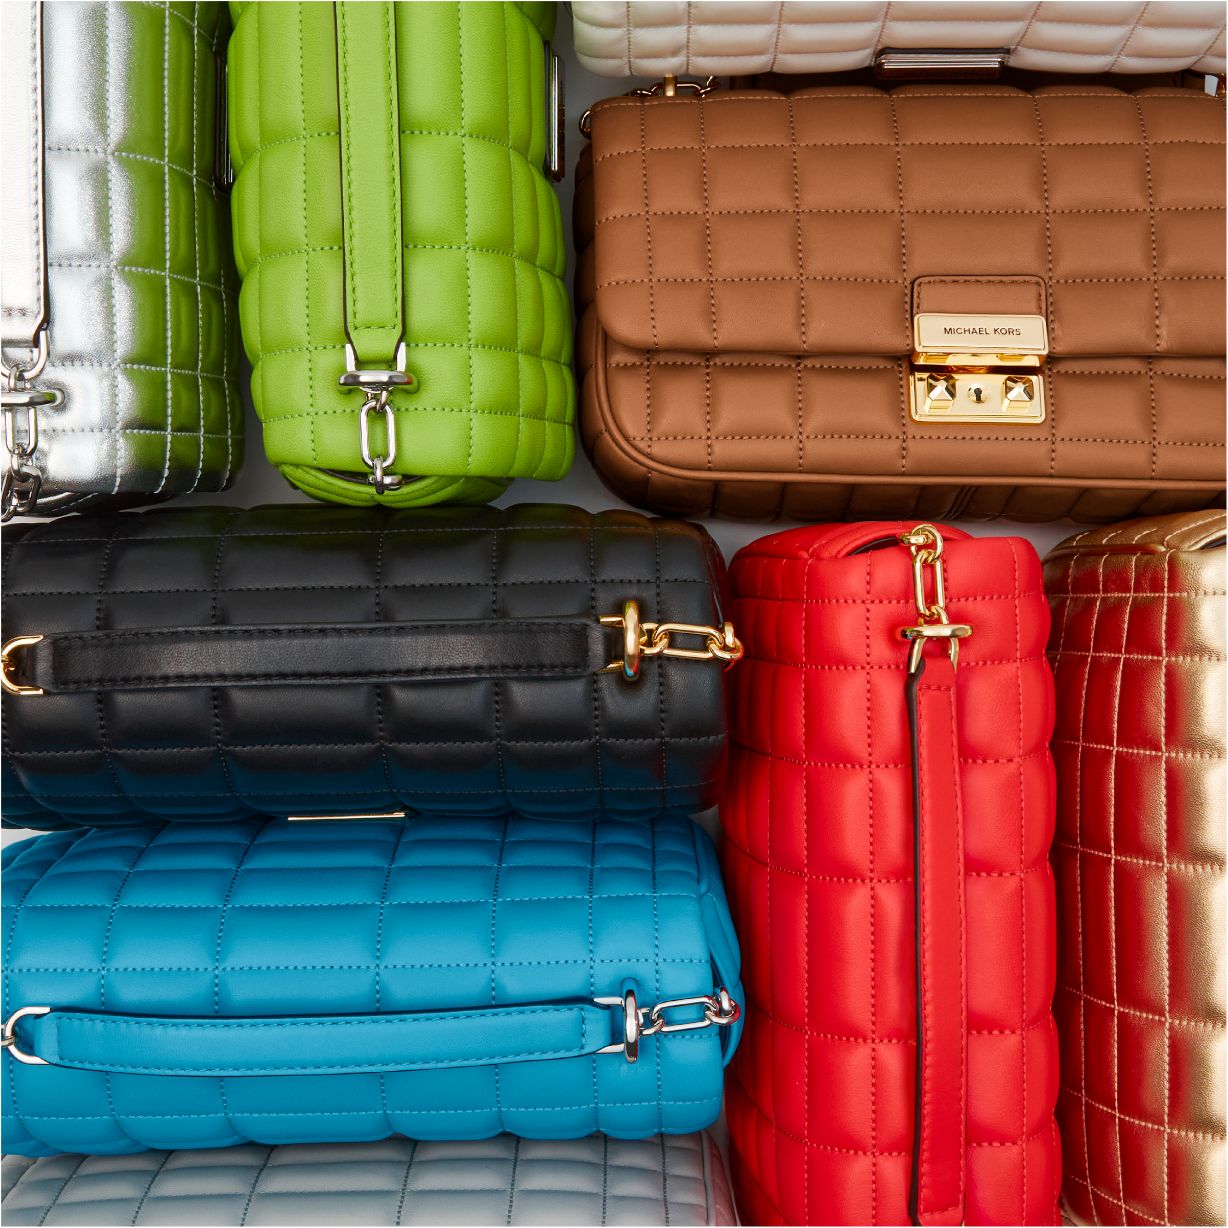 MICHAEL Michael Kors Hamilton Flats #Dillards | Michael kors handbags  outlet, Handbags michael kors, Michael kors bag